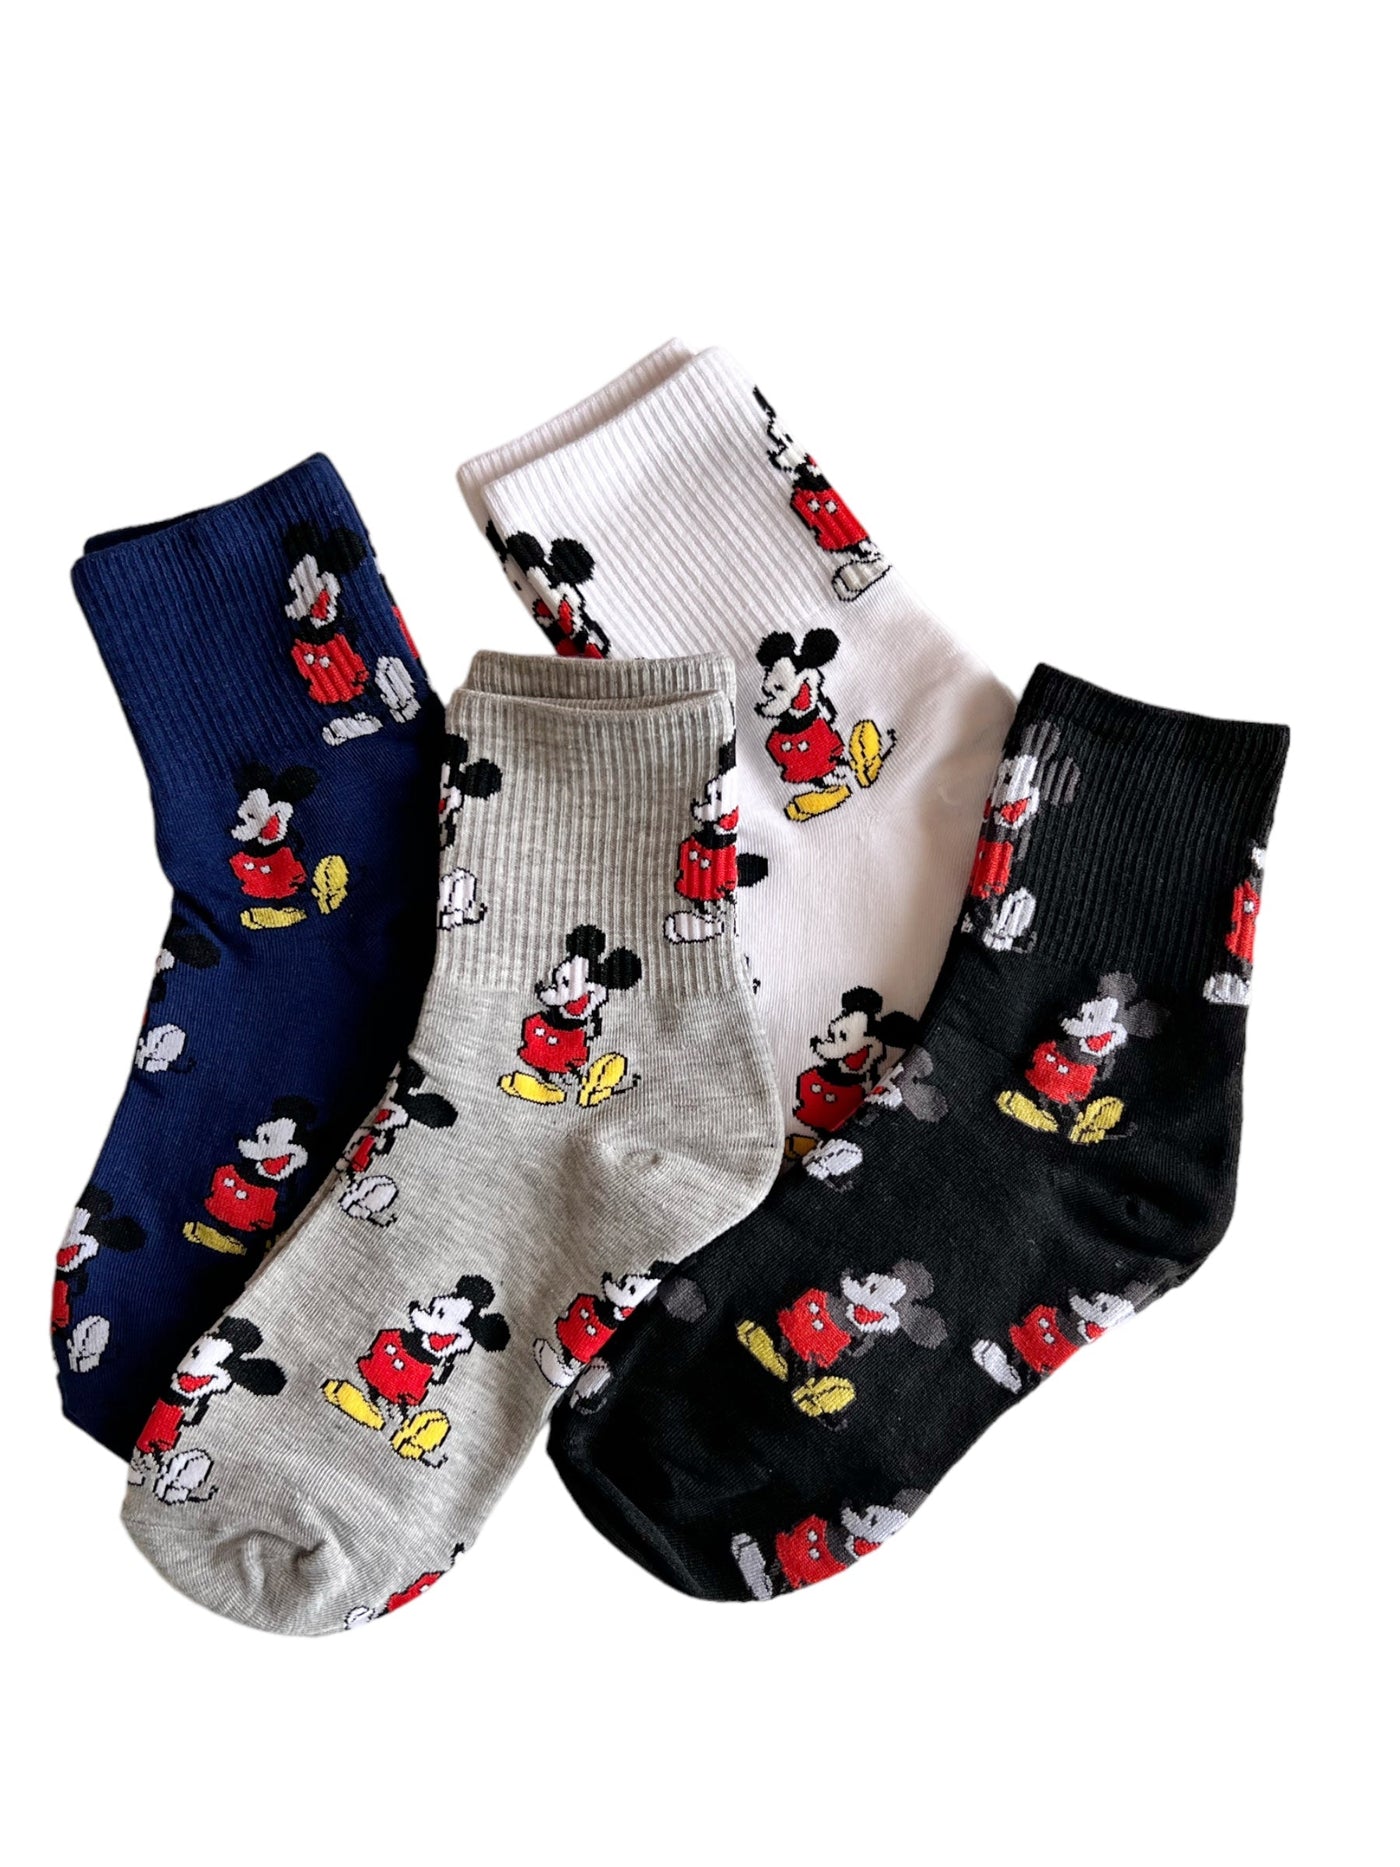 4pcs mickey mouse socks set - PROBOXS